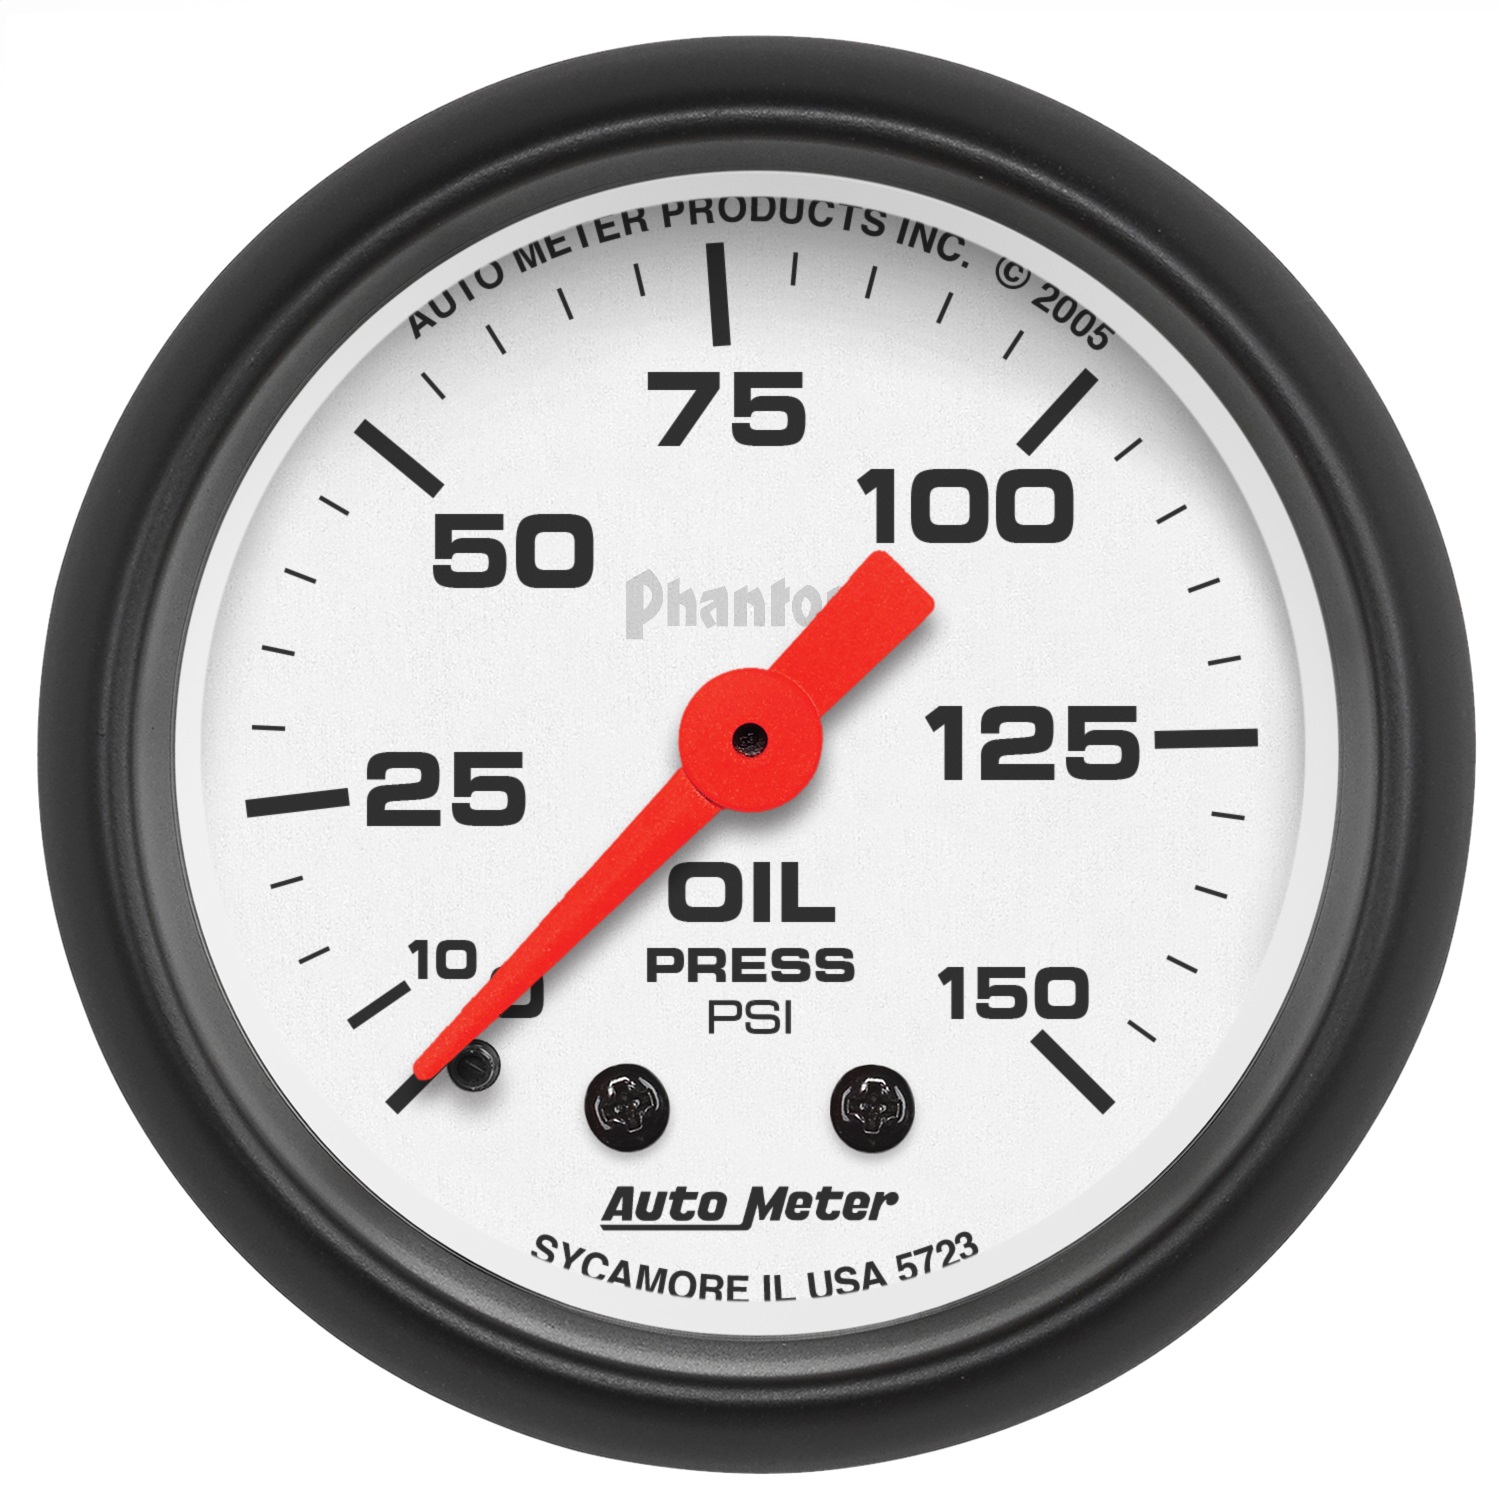 Auto Meter Auto Meter 5723 Phantom; Mechanical Oil Pressure Gauge